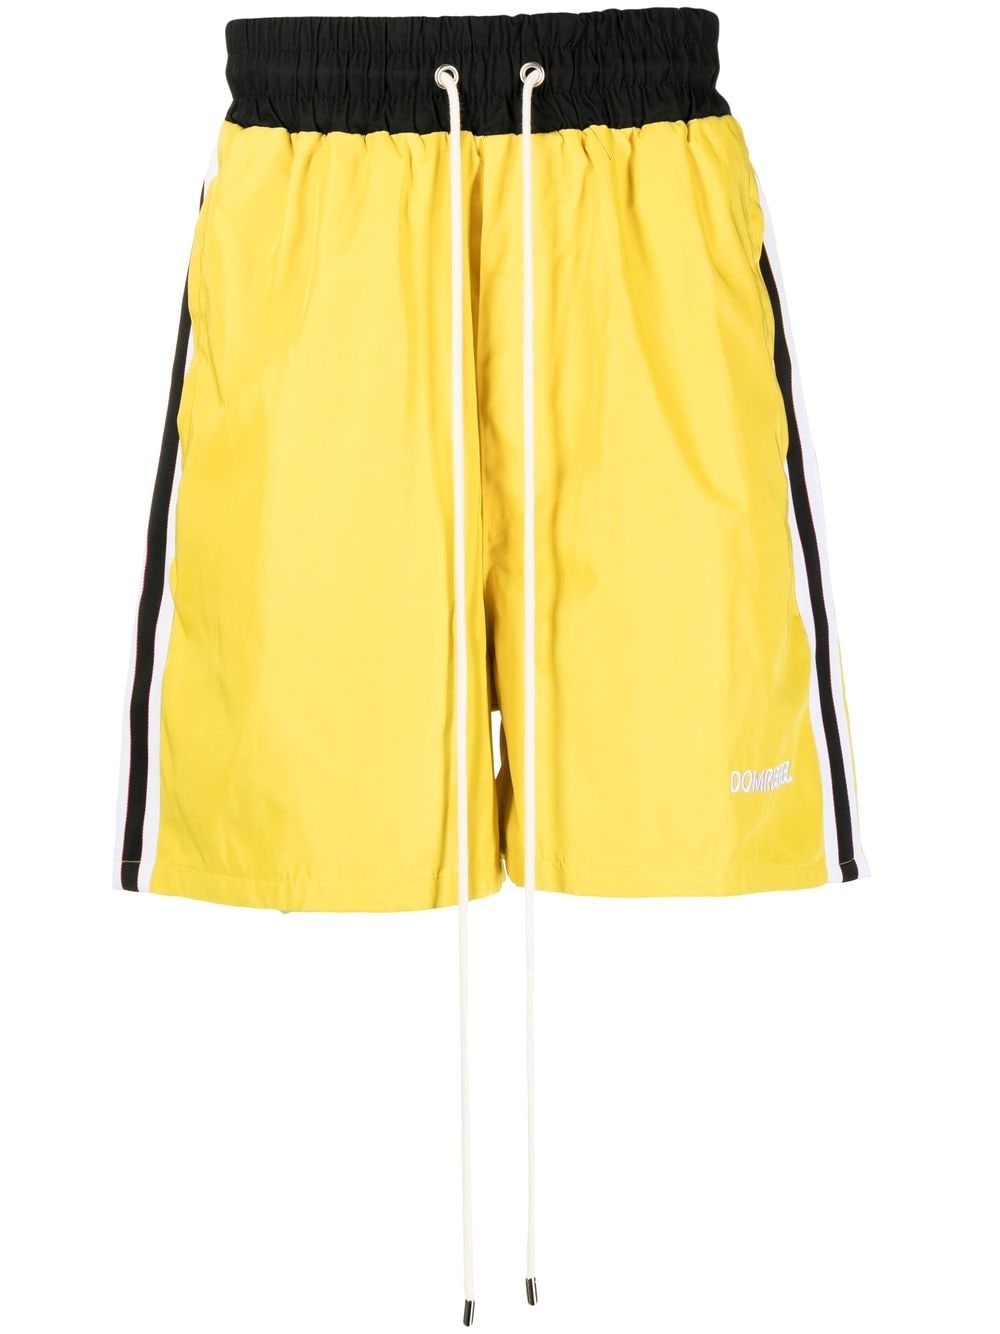 DOMREBEL Basketball drawstring shorts - Yellow von DOMREBEL